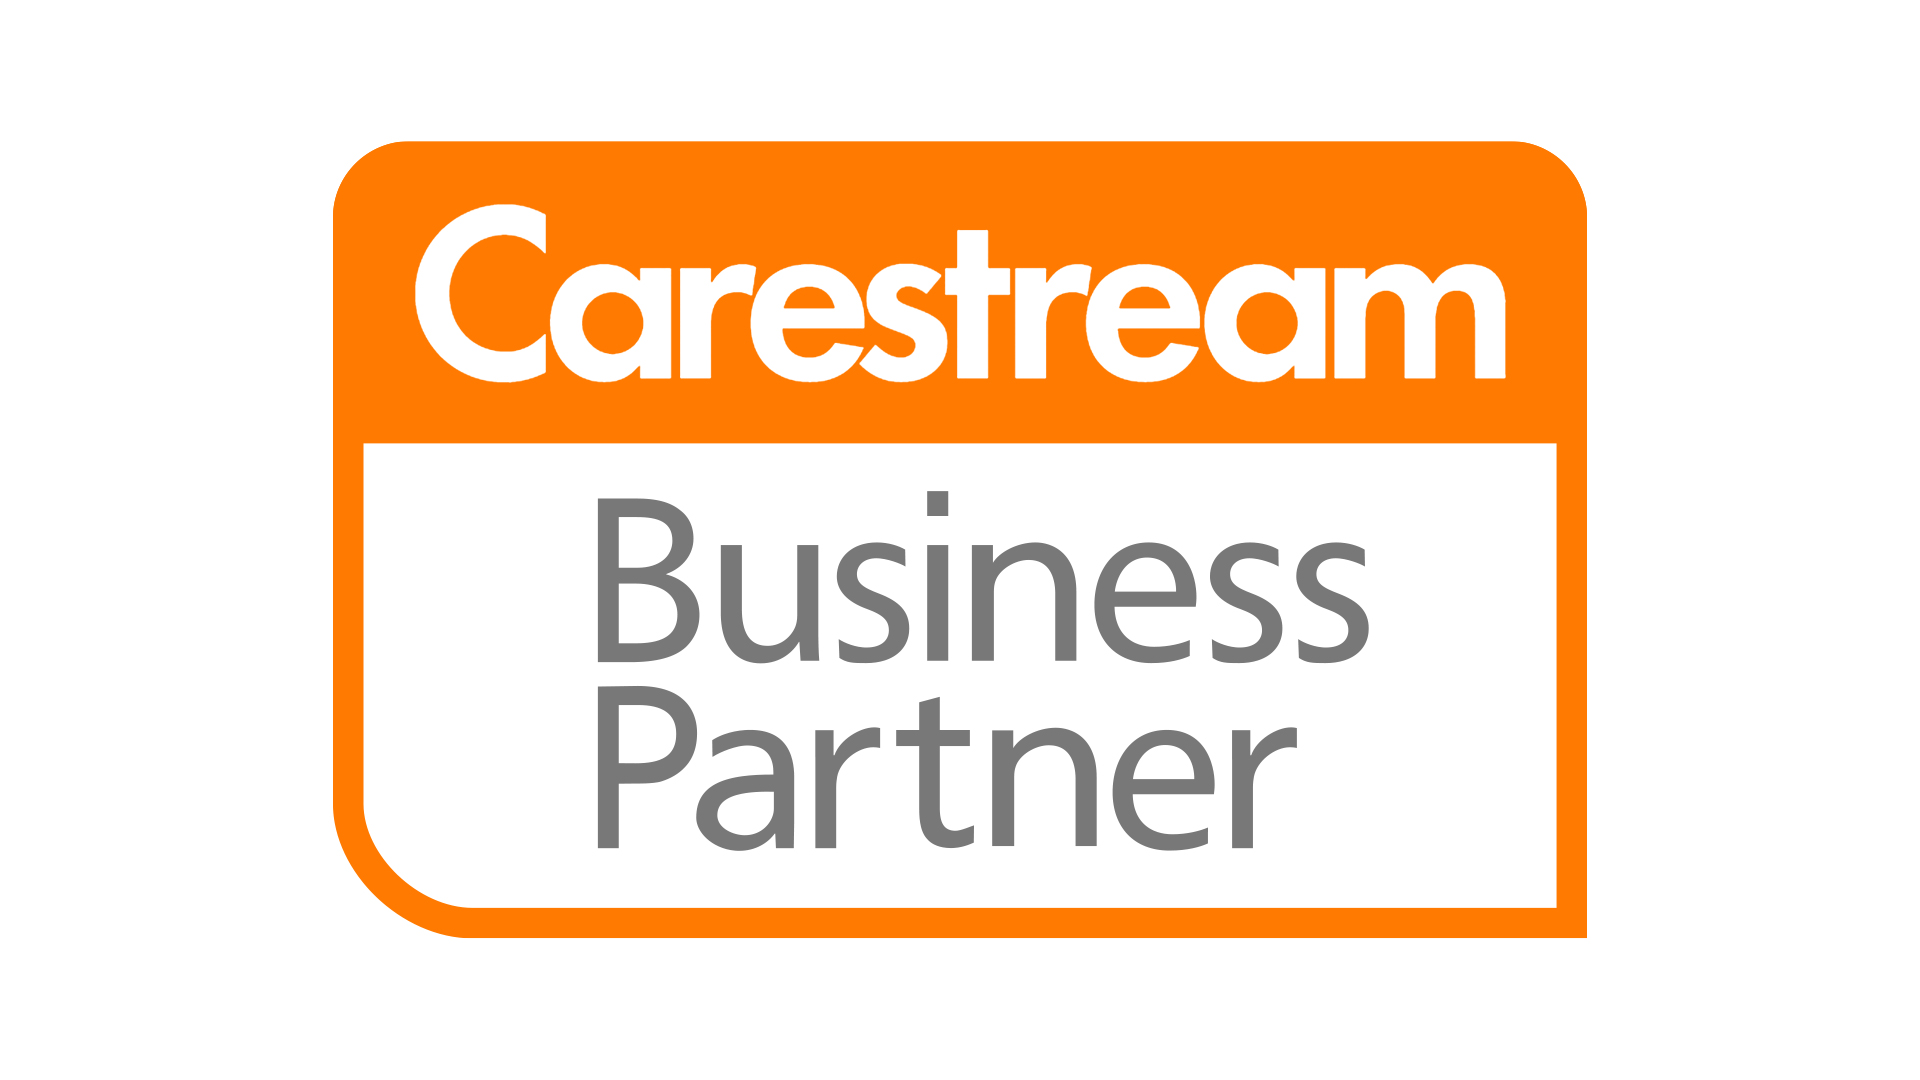 Carestream Business Partner